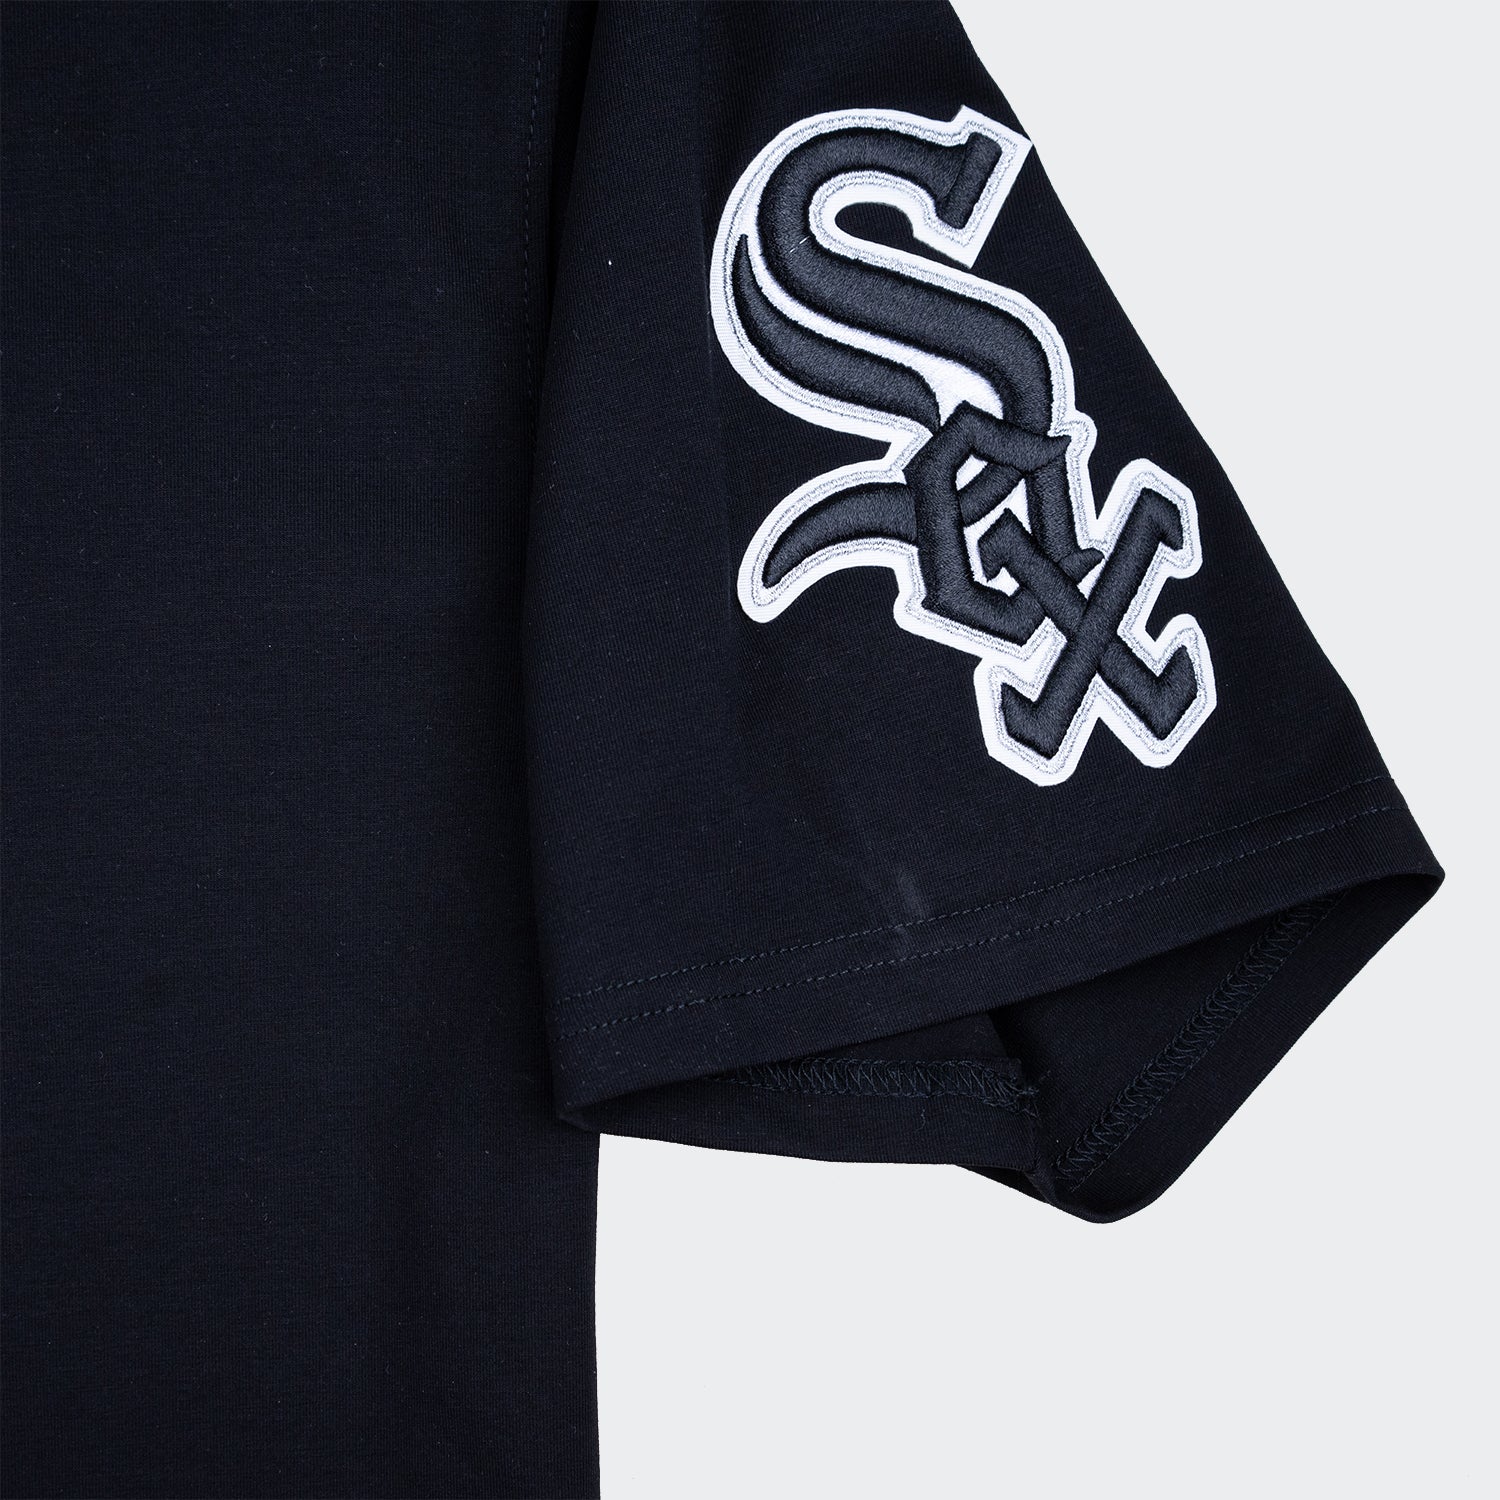 Chicago White Sox New Era Women's Crew-Neck T Shirt - Grey/White x Small